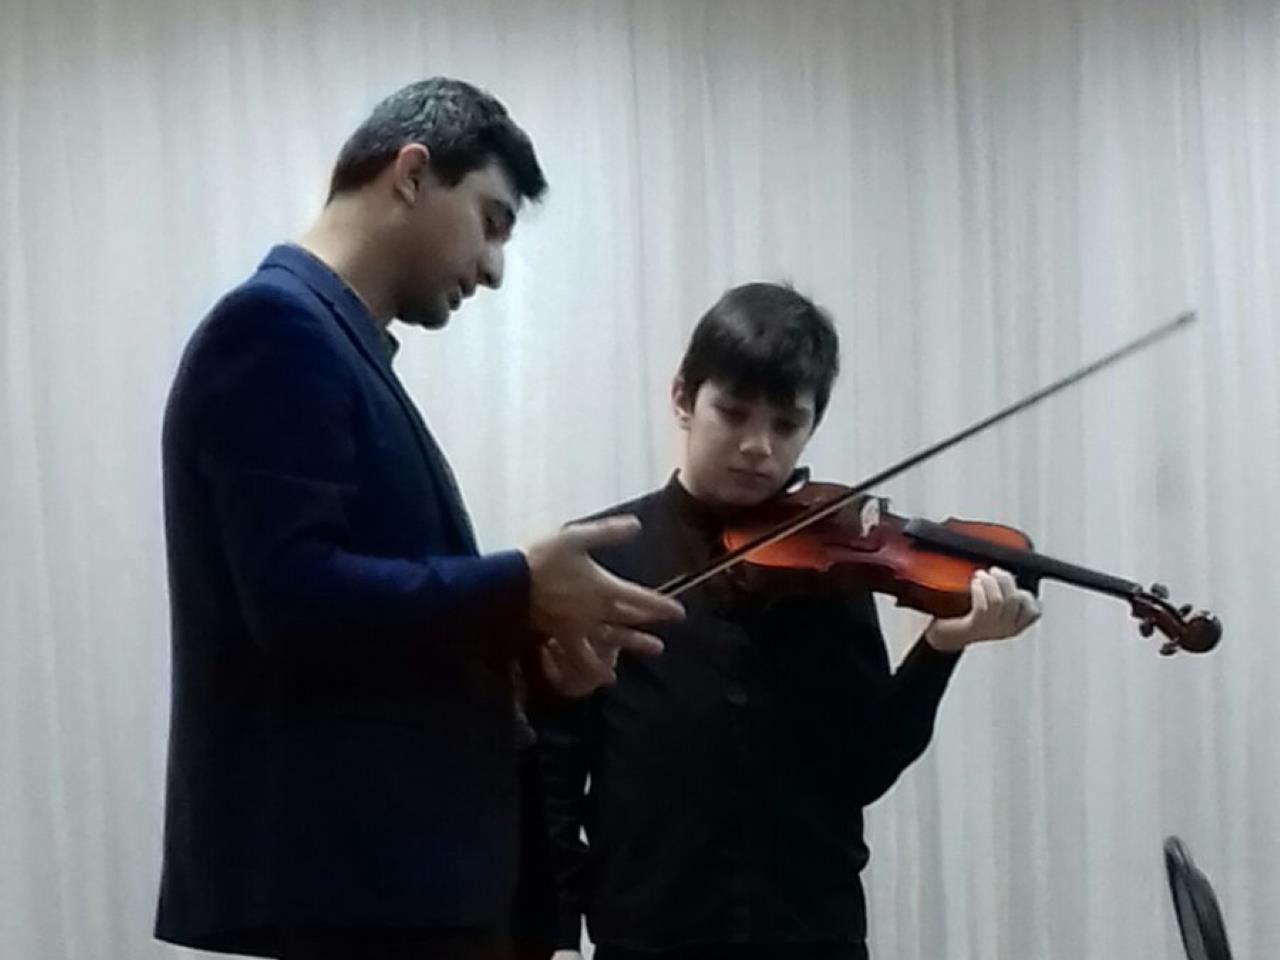 Бадалян Месроп на мастер-классе по игре на скрипке